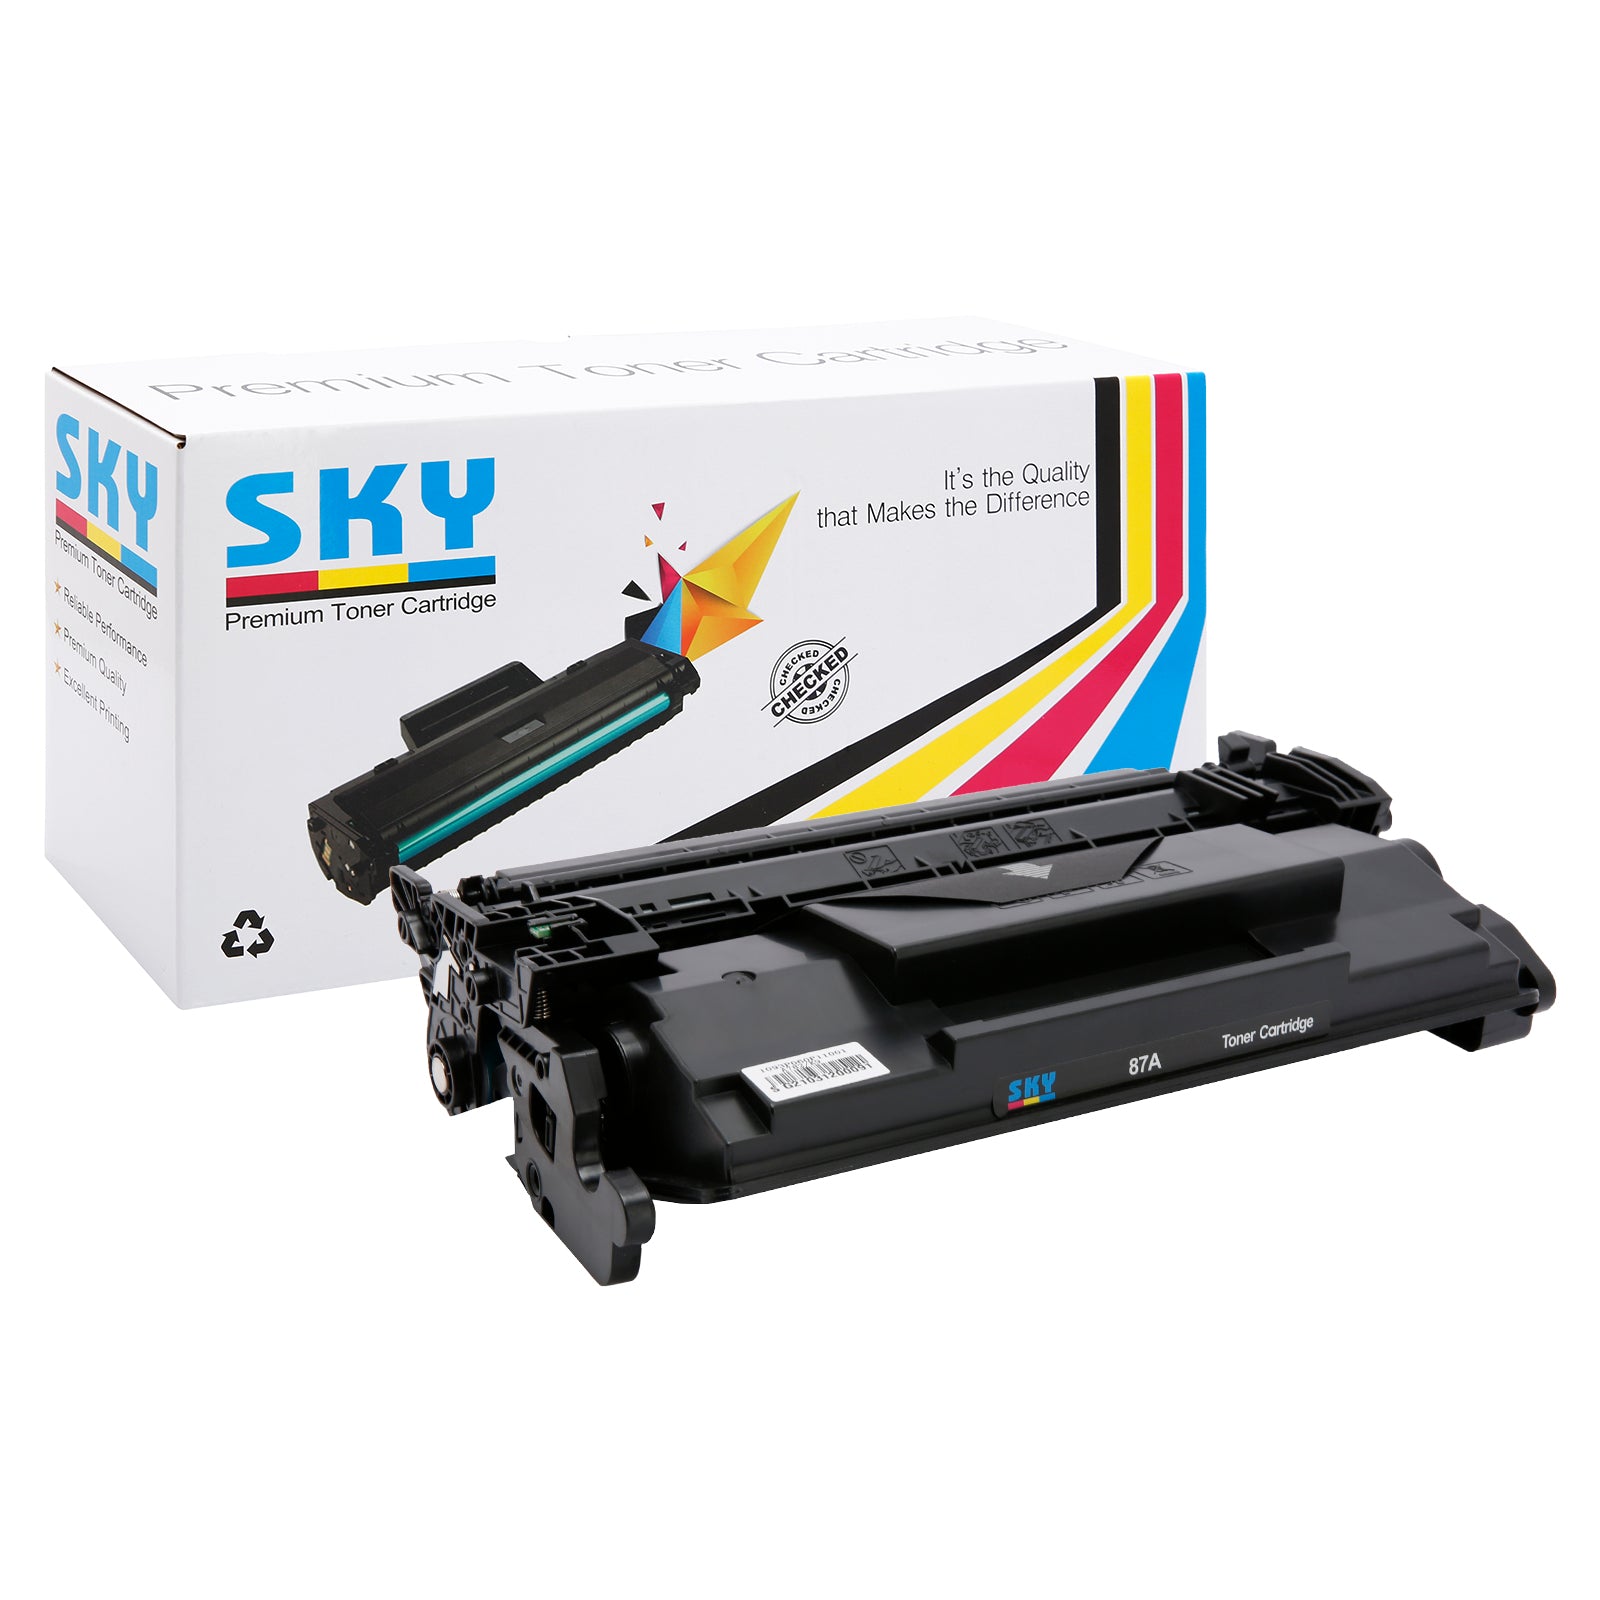 SKY 87A Toner Cartridge CF287A for HP LaserJet Enterprise M501 M506 MFP M527﻿ Printers